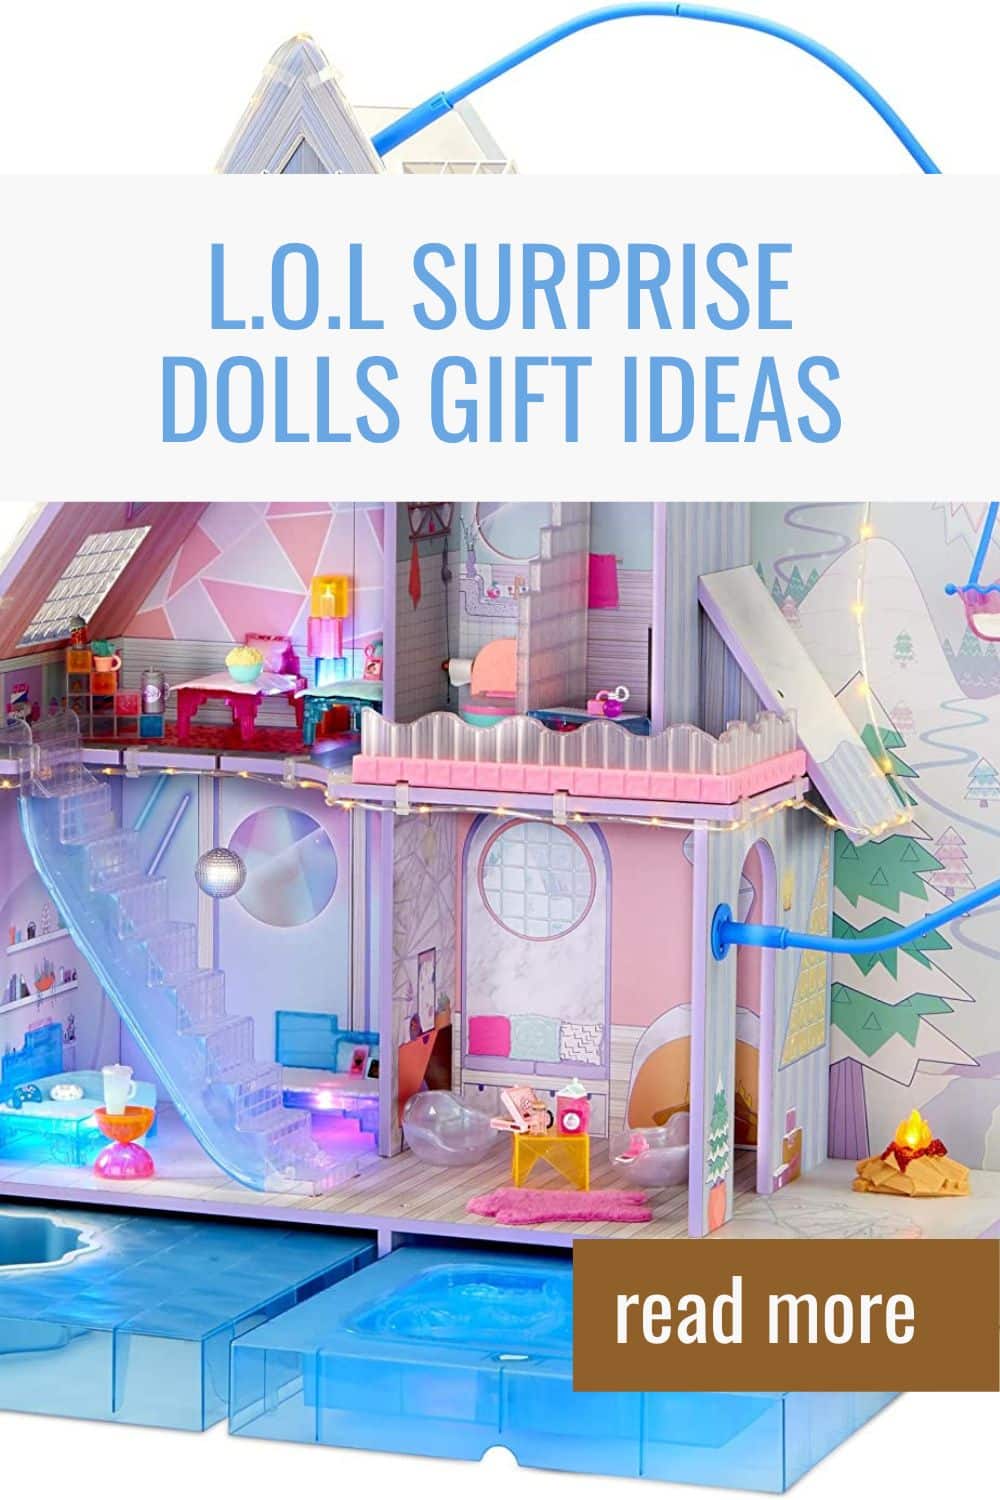 L.O.L Surprise Dolls Gift Ideas